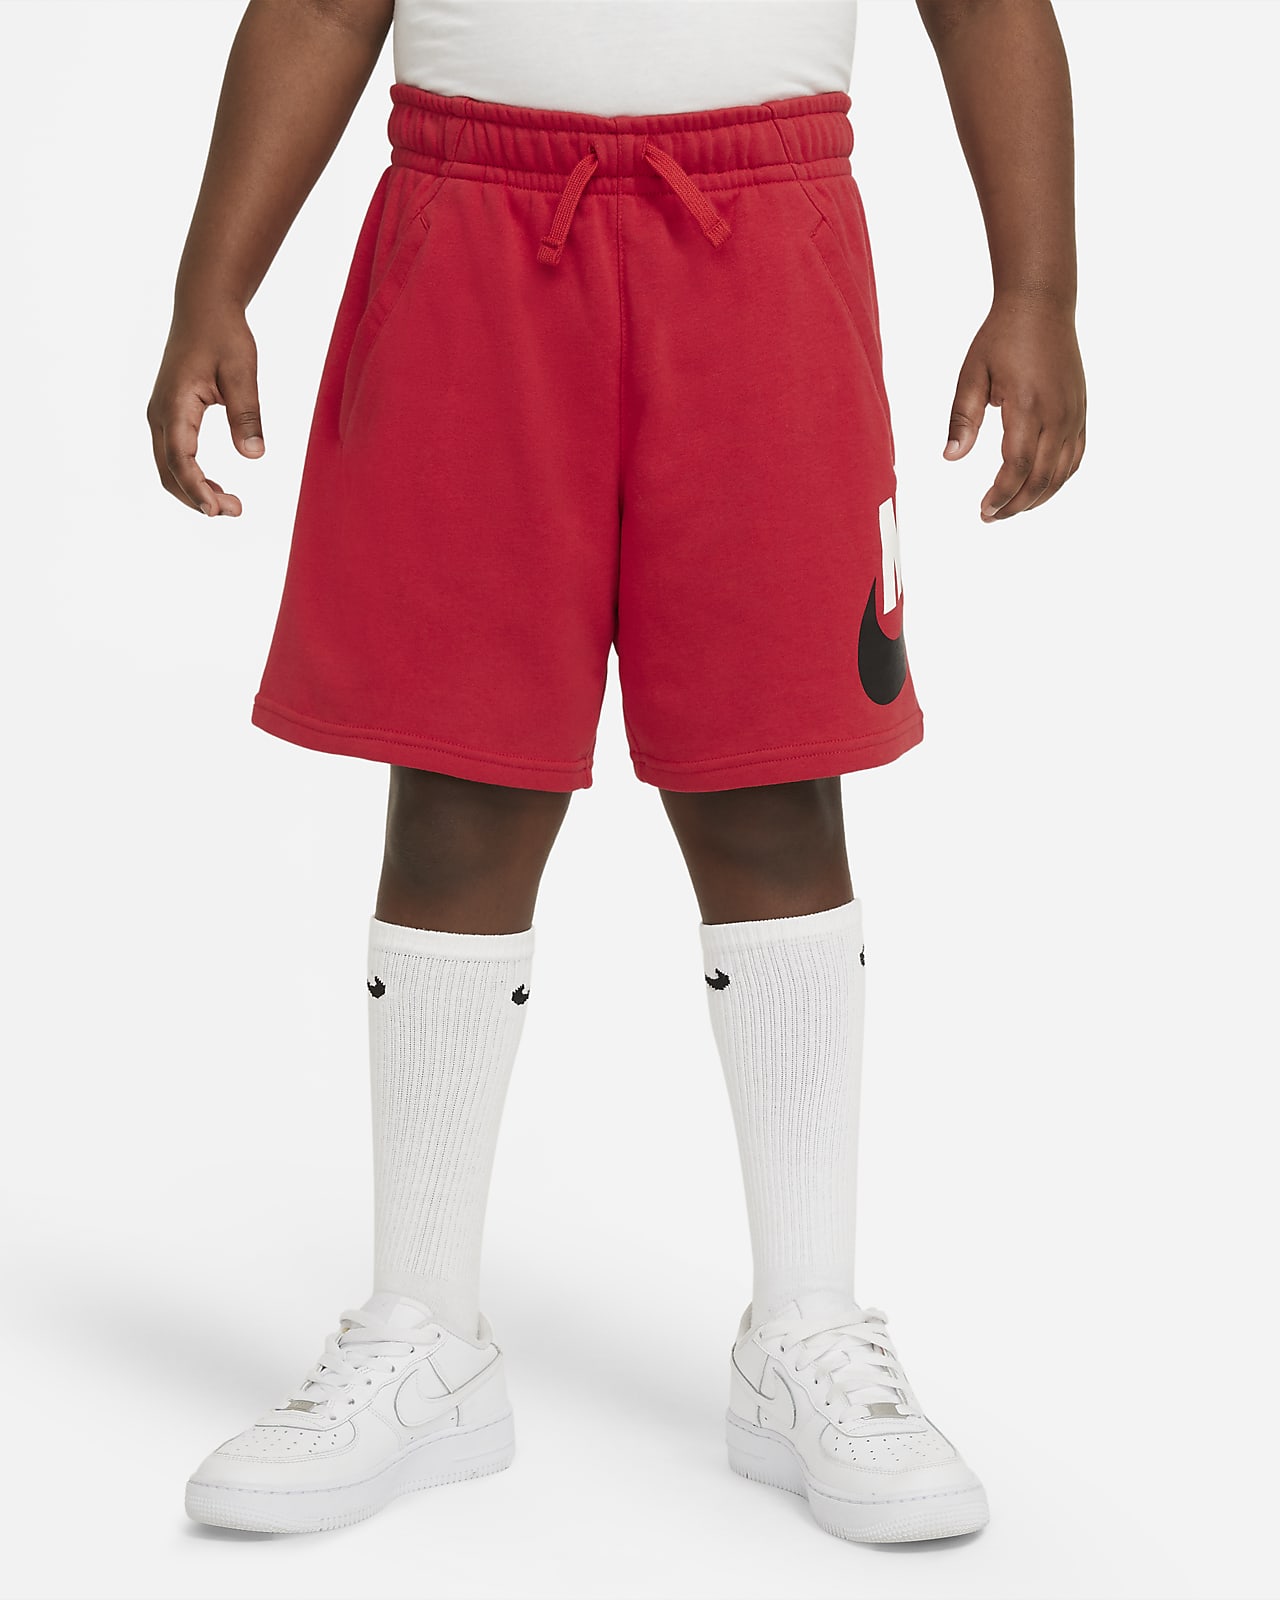 Short Shorts For Boys Clearance Buy, Save 62% | jlcatj.gob.mx